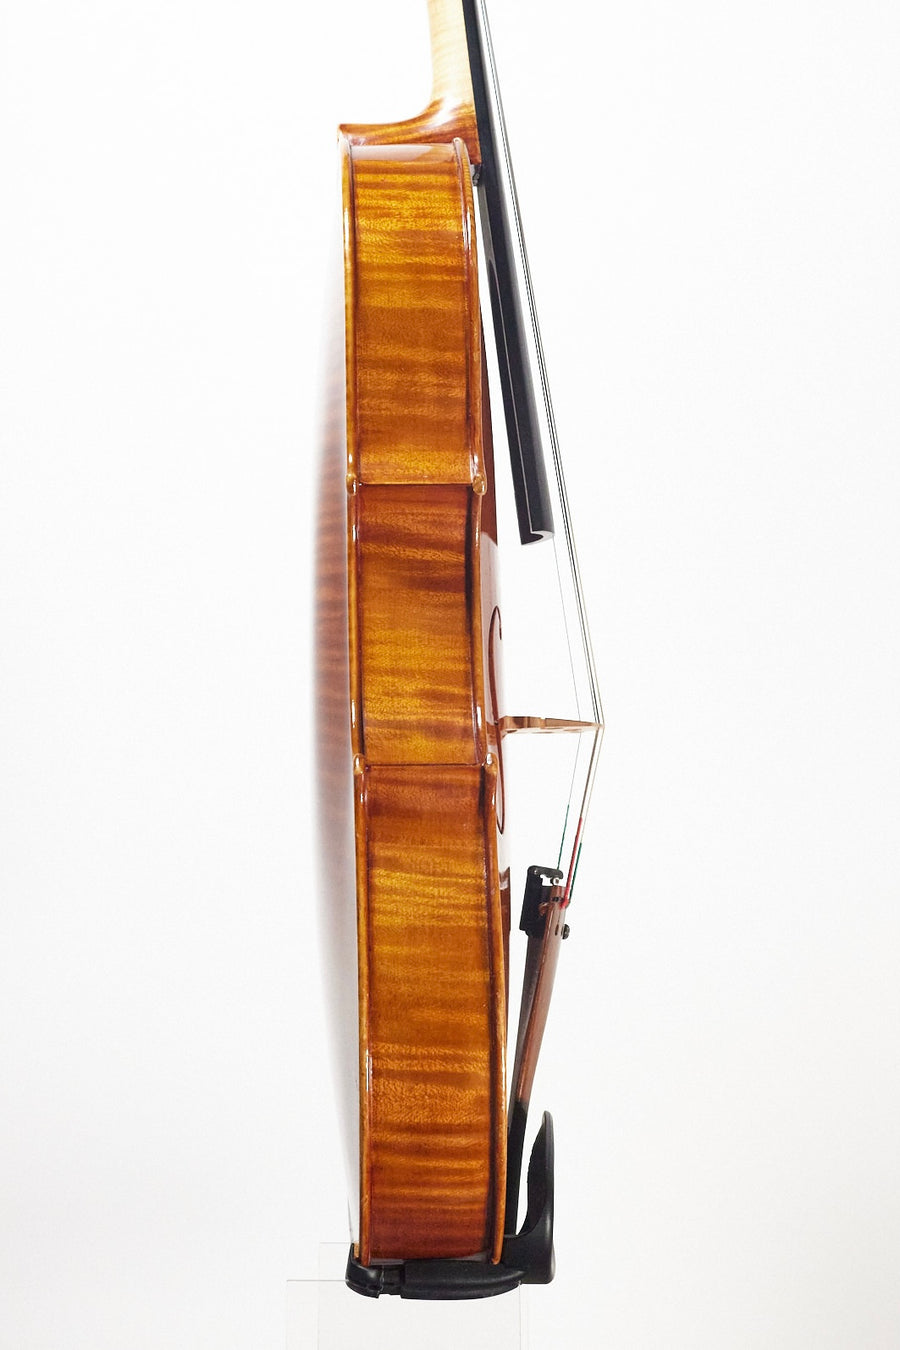 A Fine Italian Viola by Giuseppe Stefanini, 1975. 16 5/8”